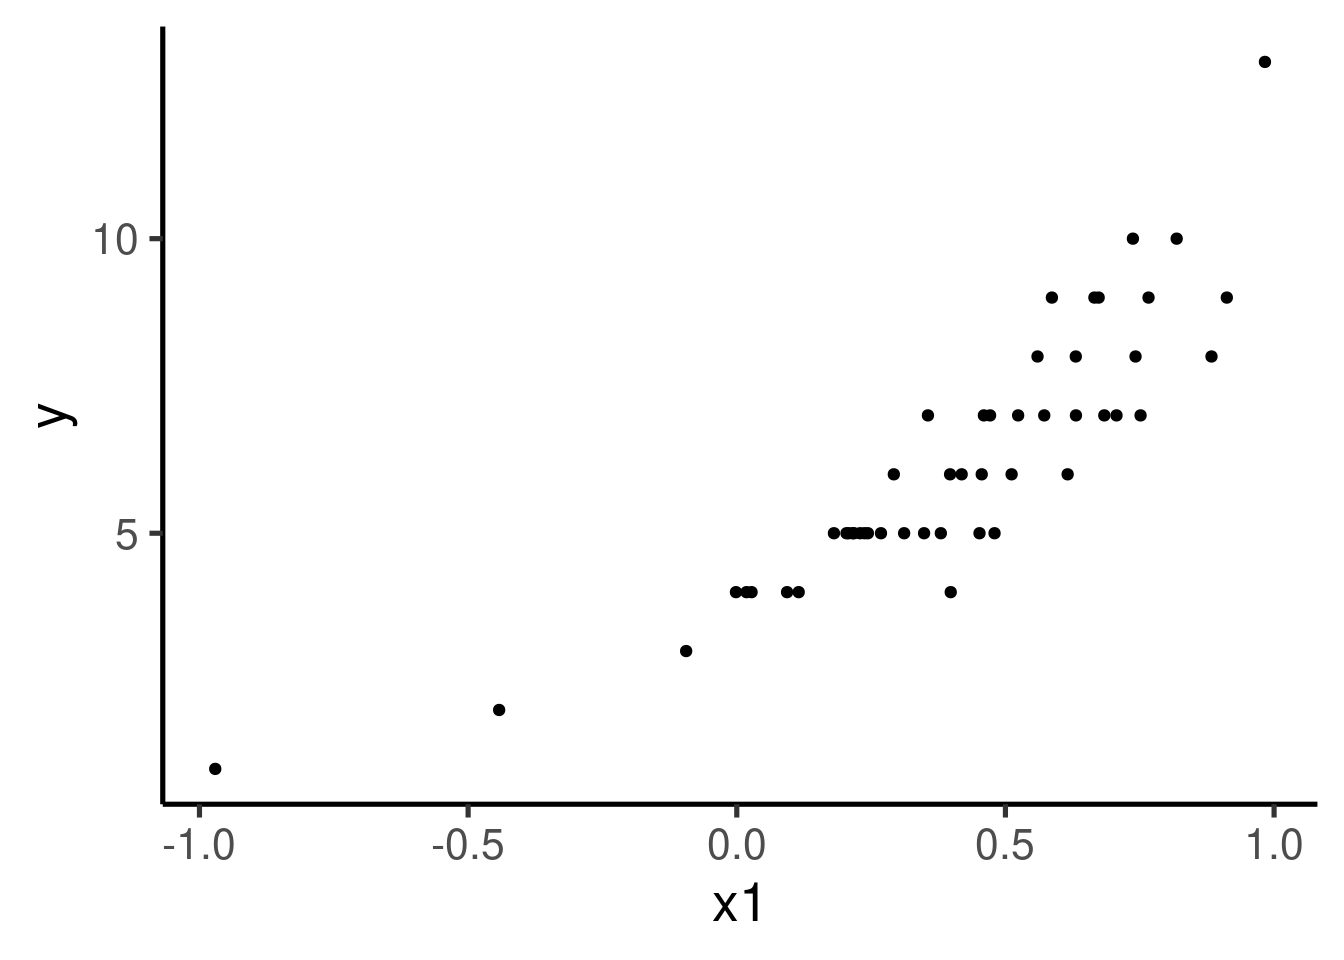 Linear regression models